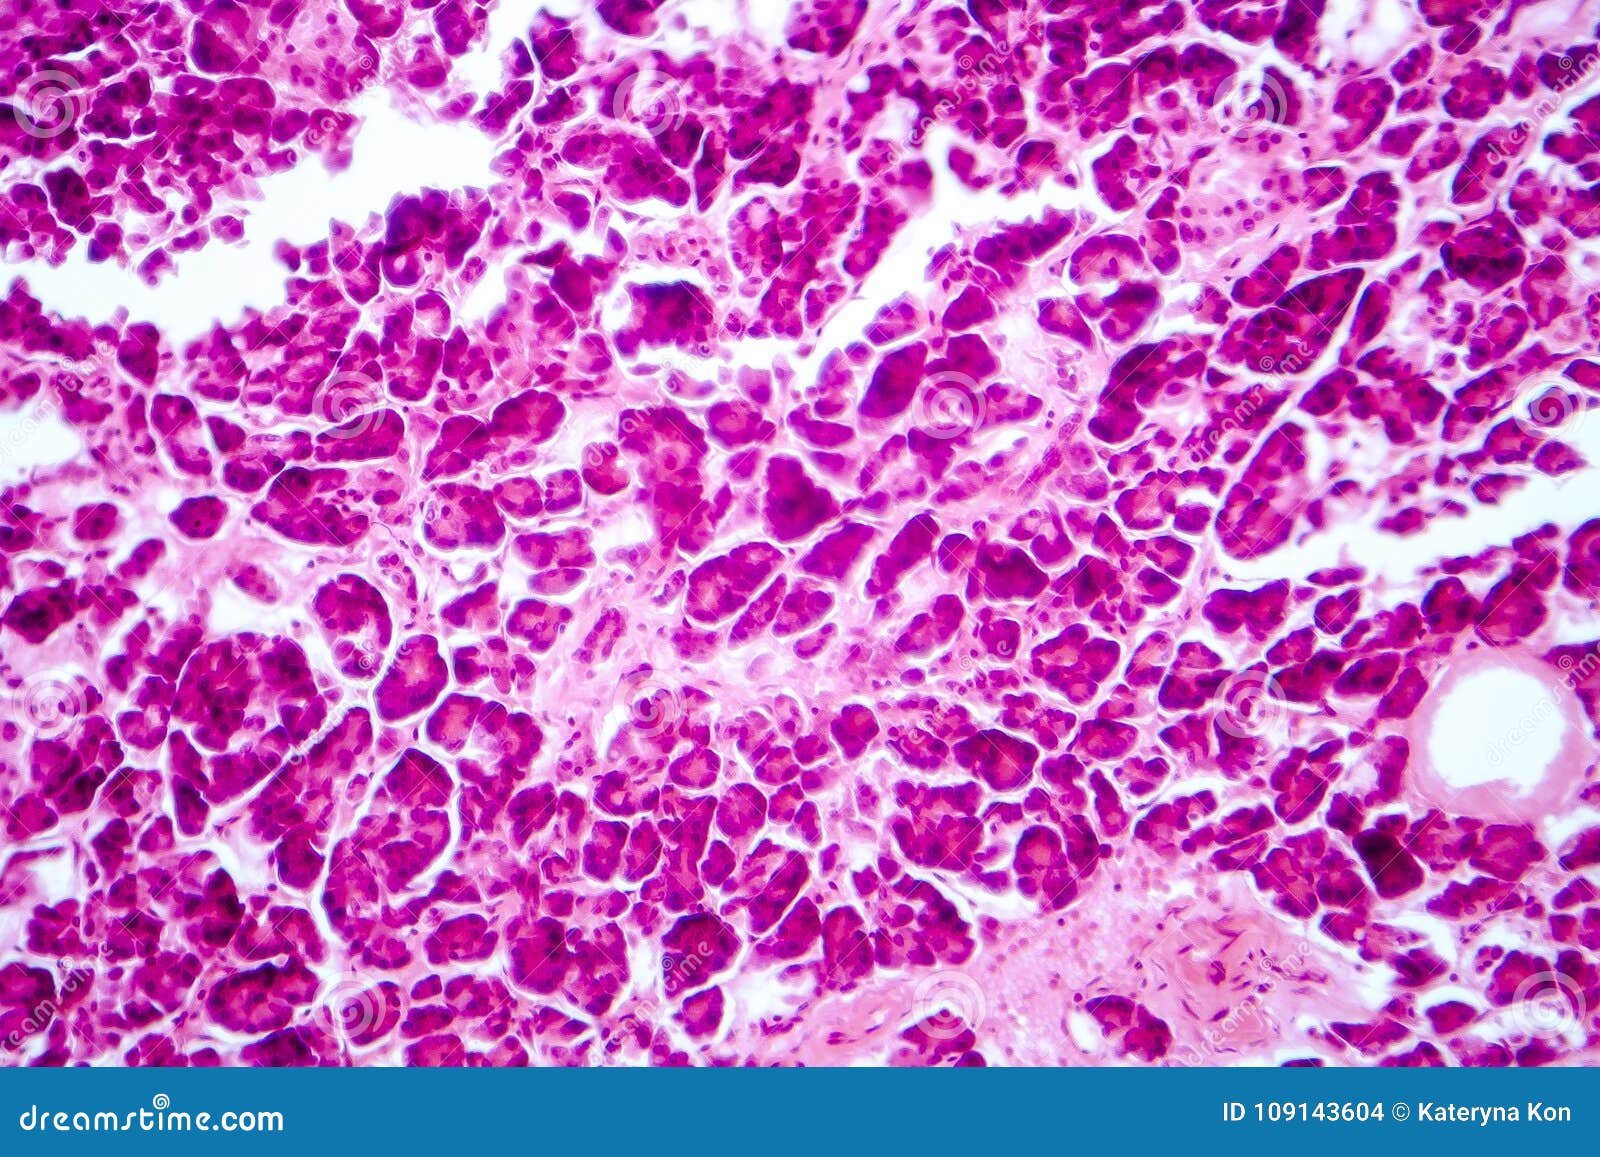 histology of human pancreatic tissue